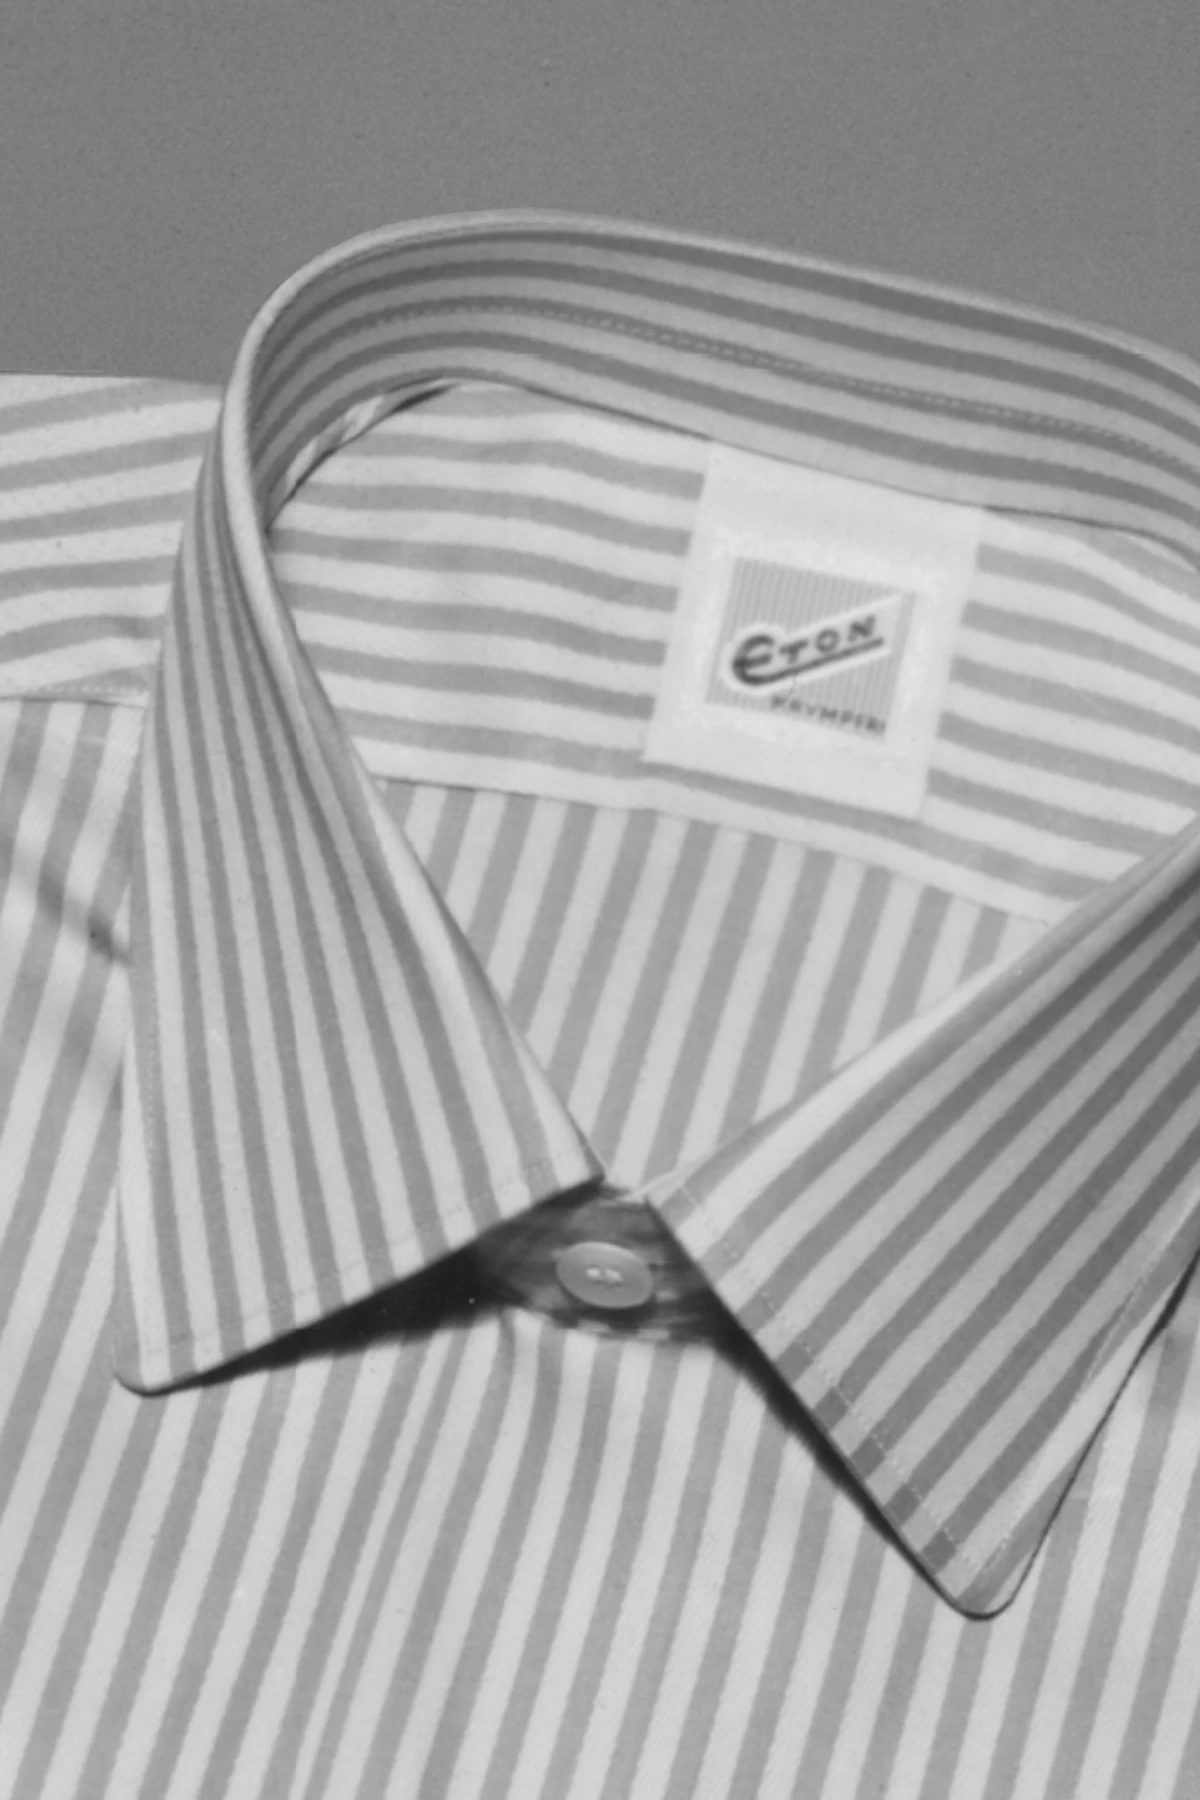 striped retro image of eton shirt